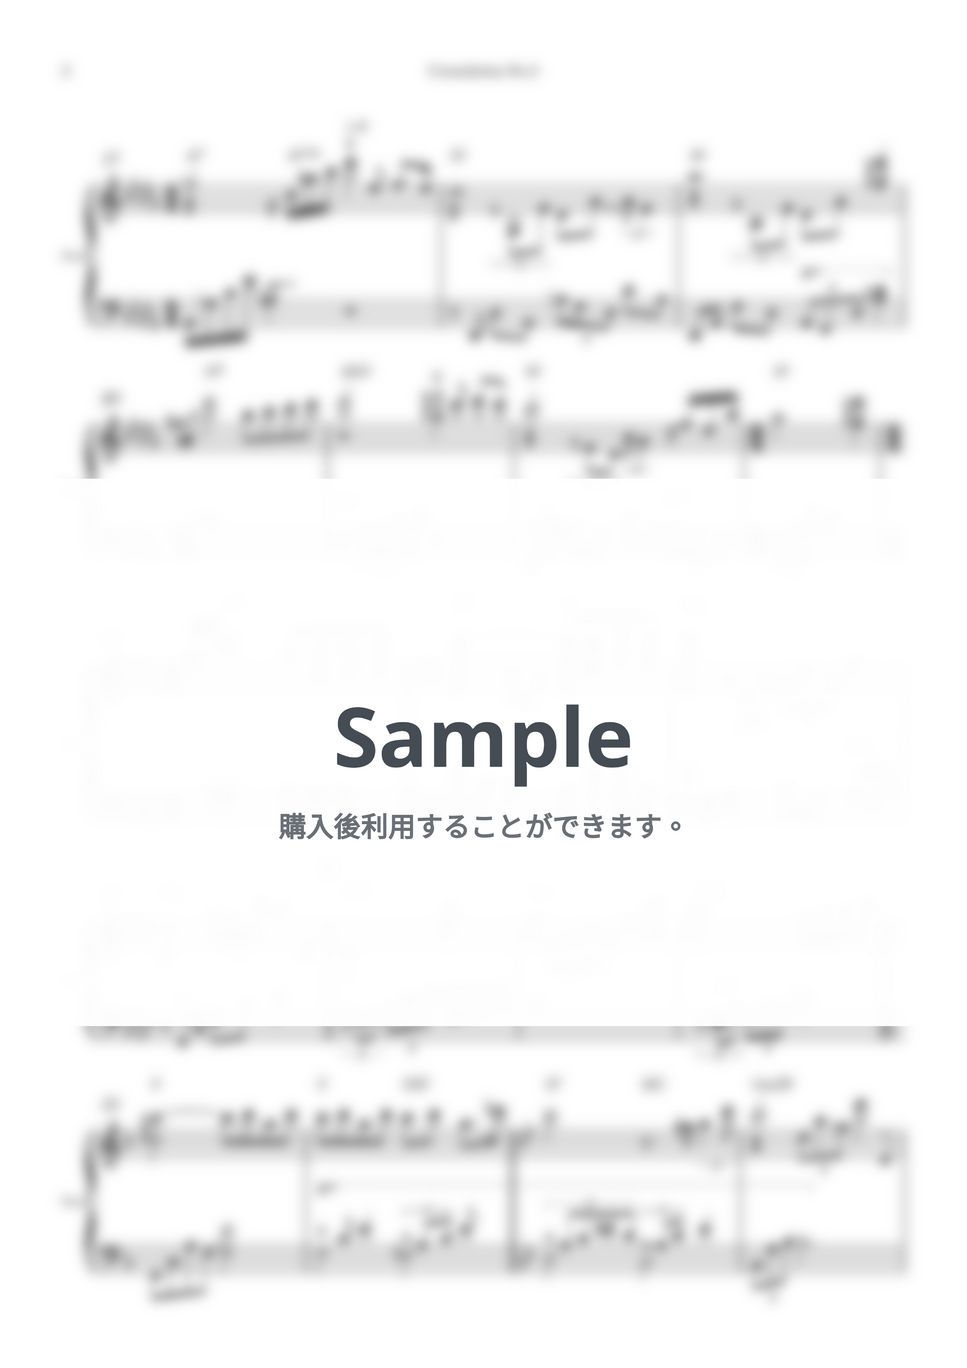 Liszt - Consolation No.3 (ピアノソロ楽譜) by Piano QQQ